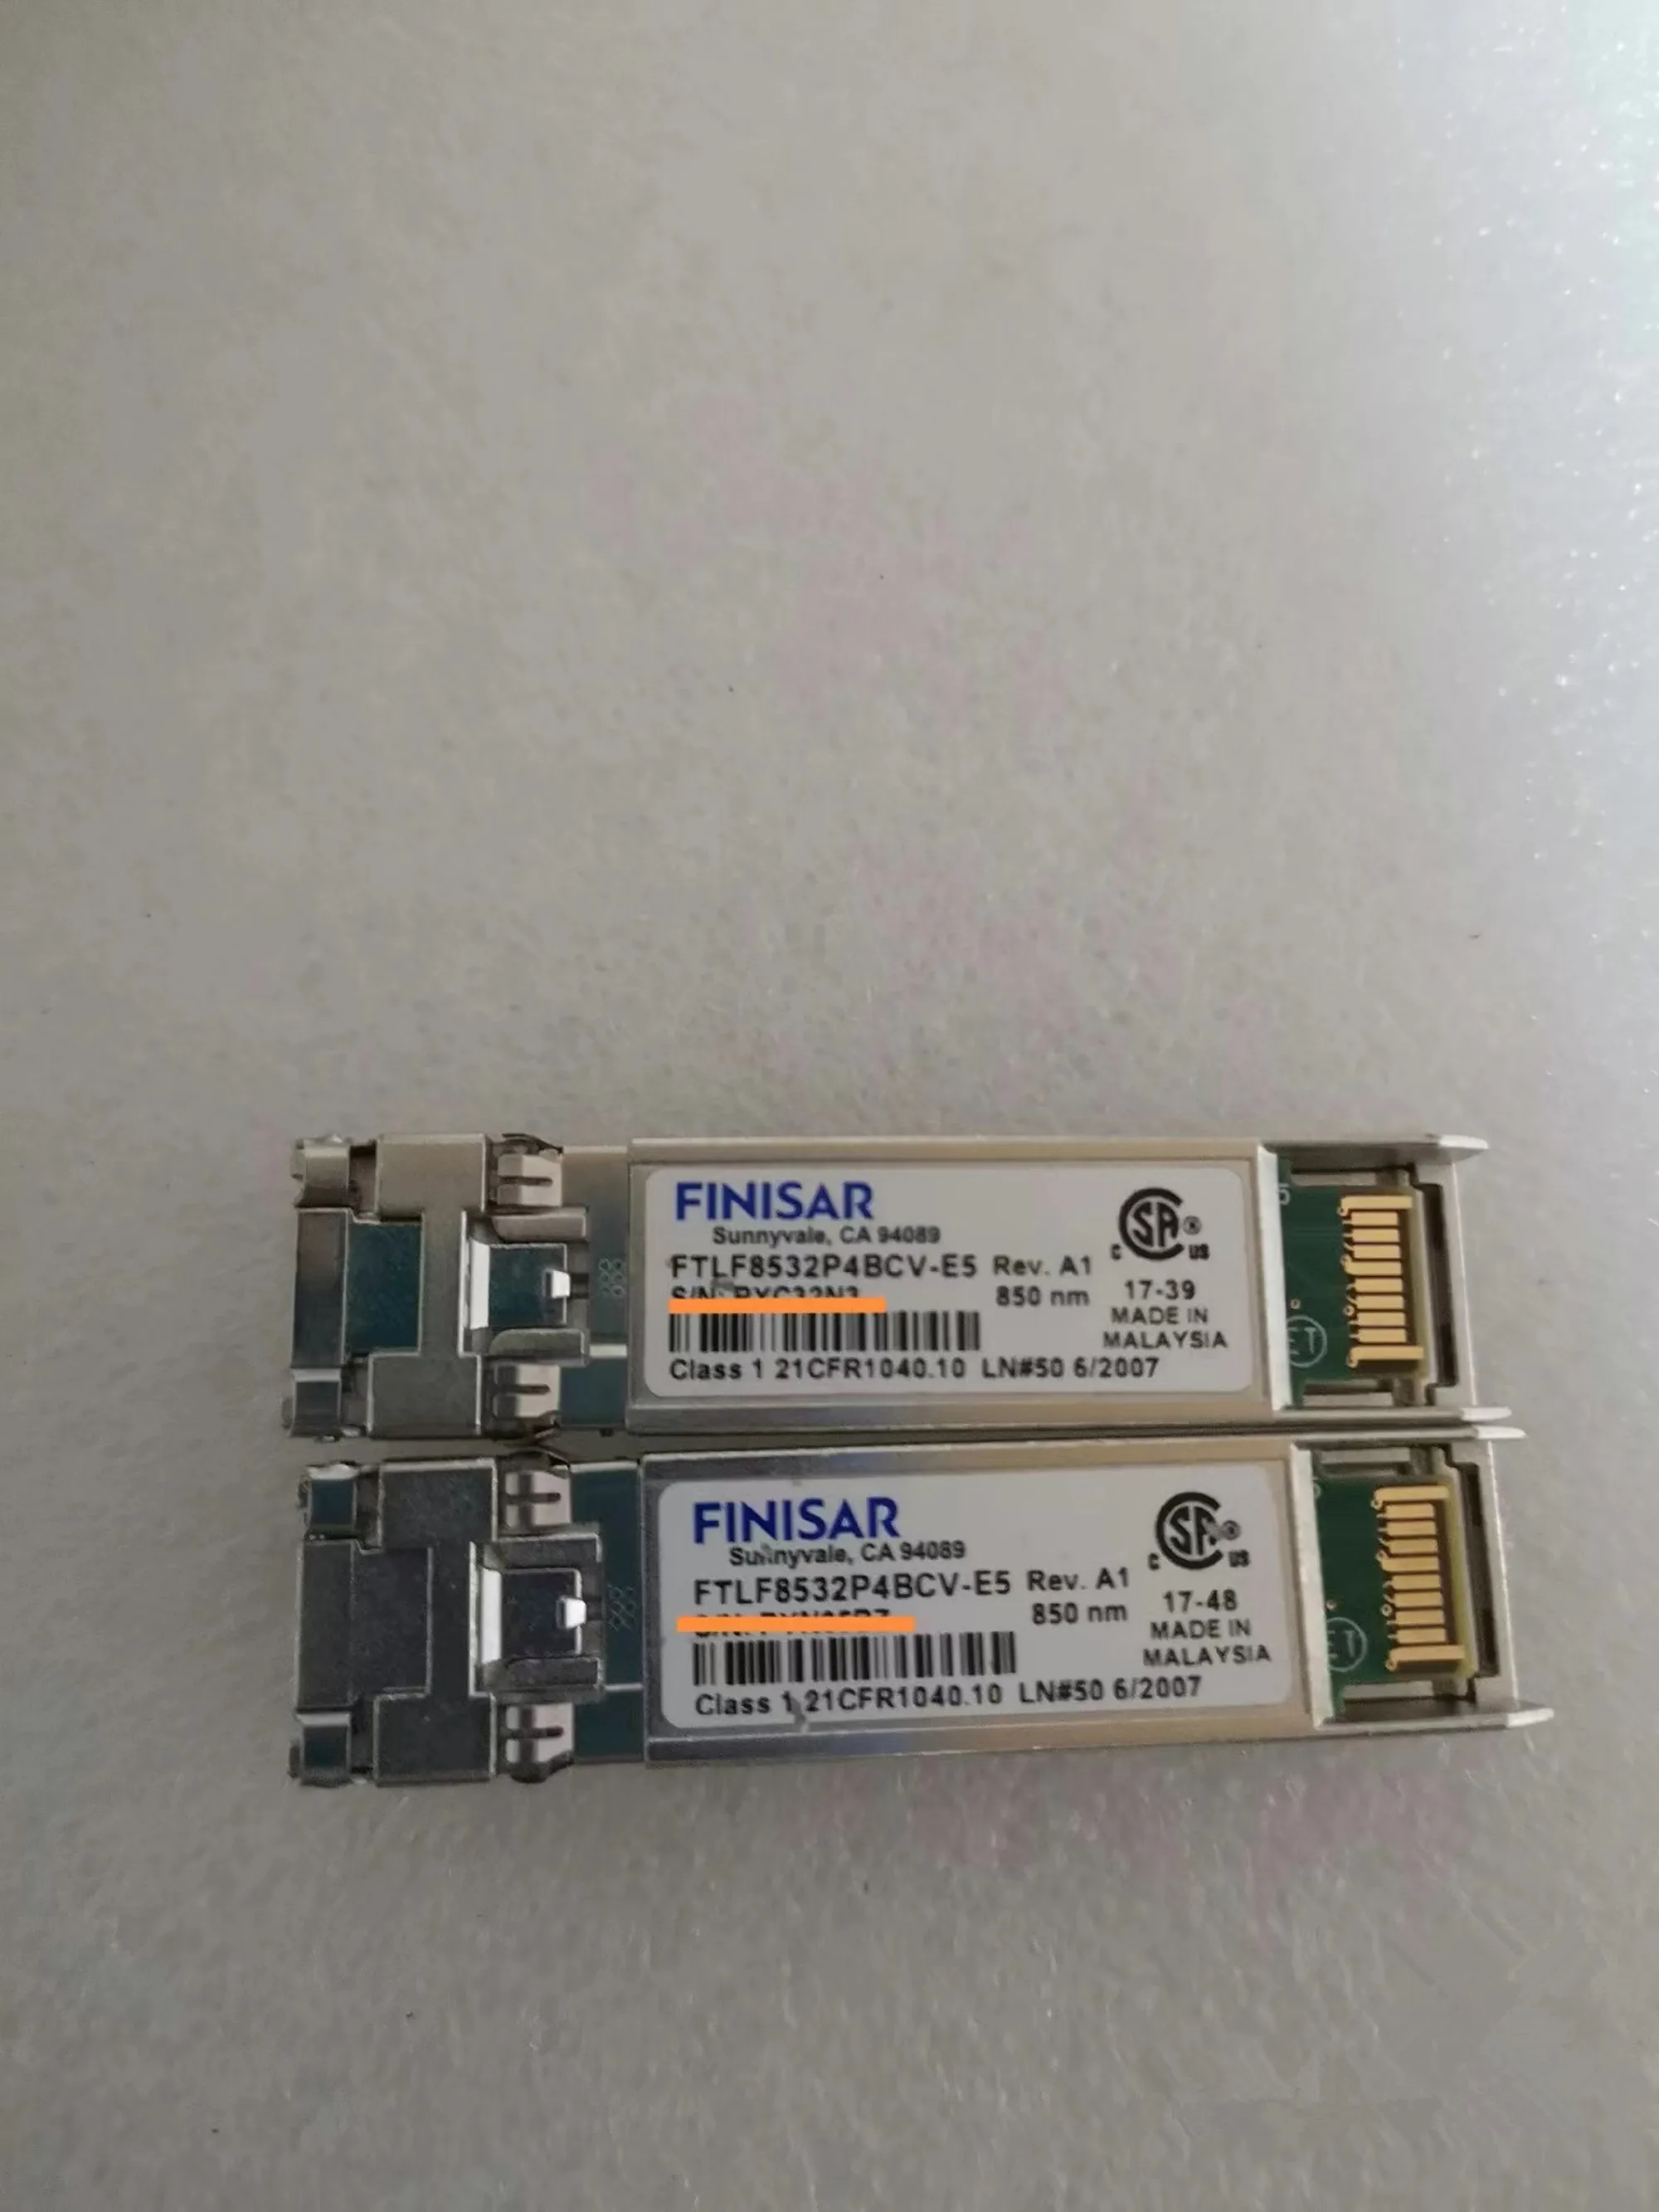 Finisar Fiber Transceiver SFP 32g Switch Adapter FTLF8532P4BCV-E5 850NM 32GB Universal Optical Fiber Module